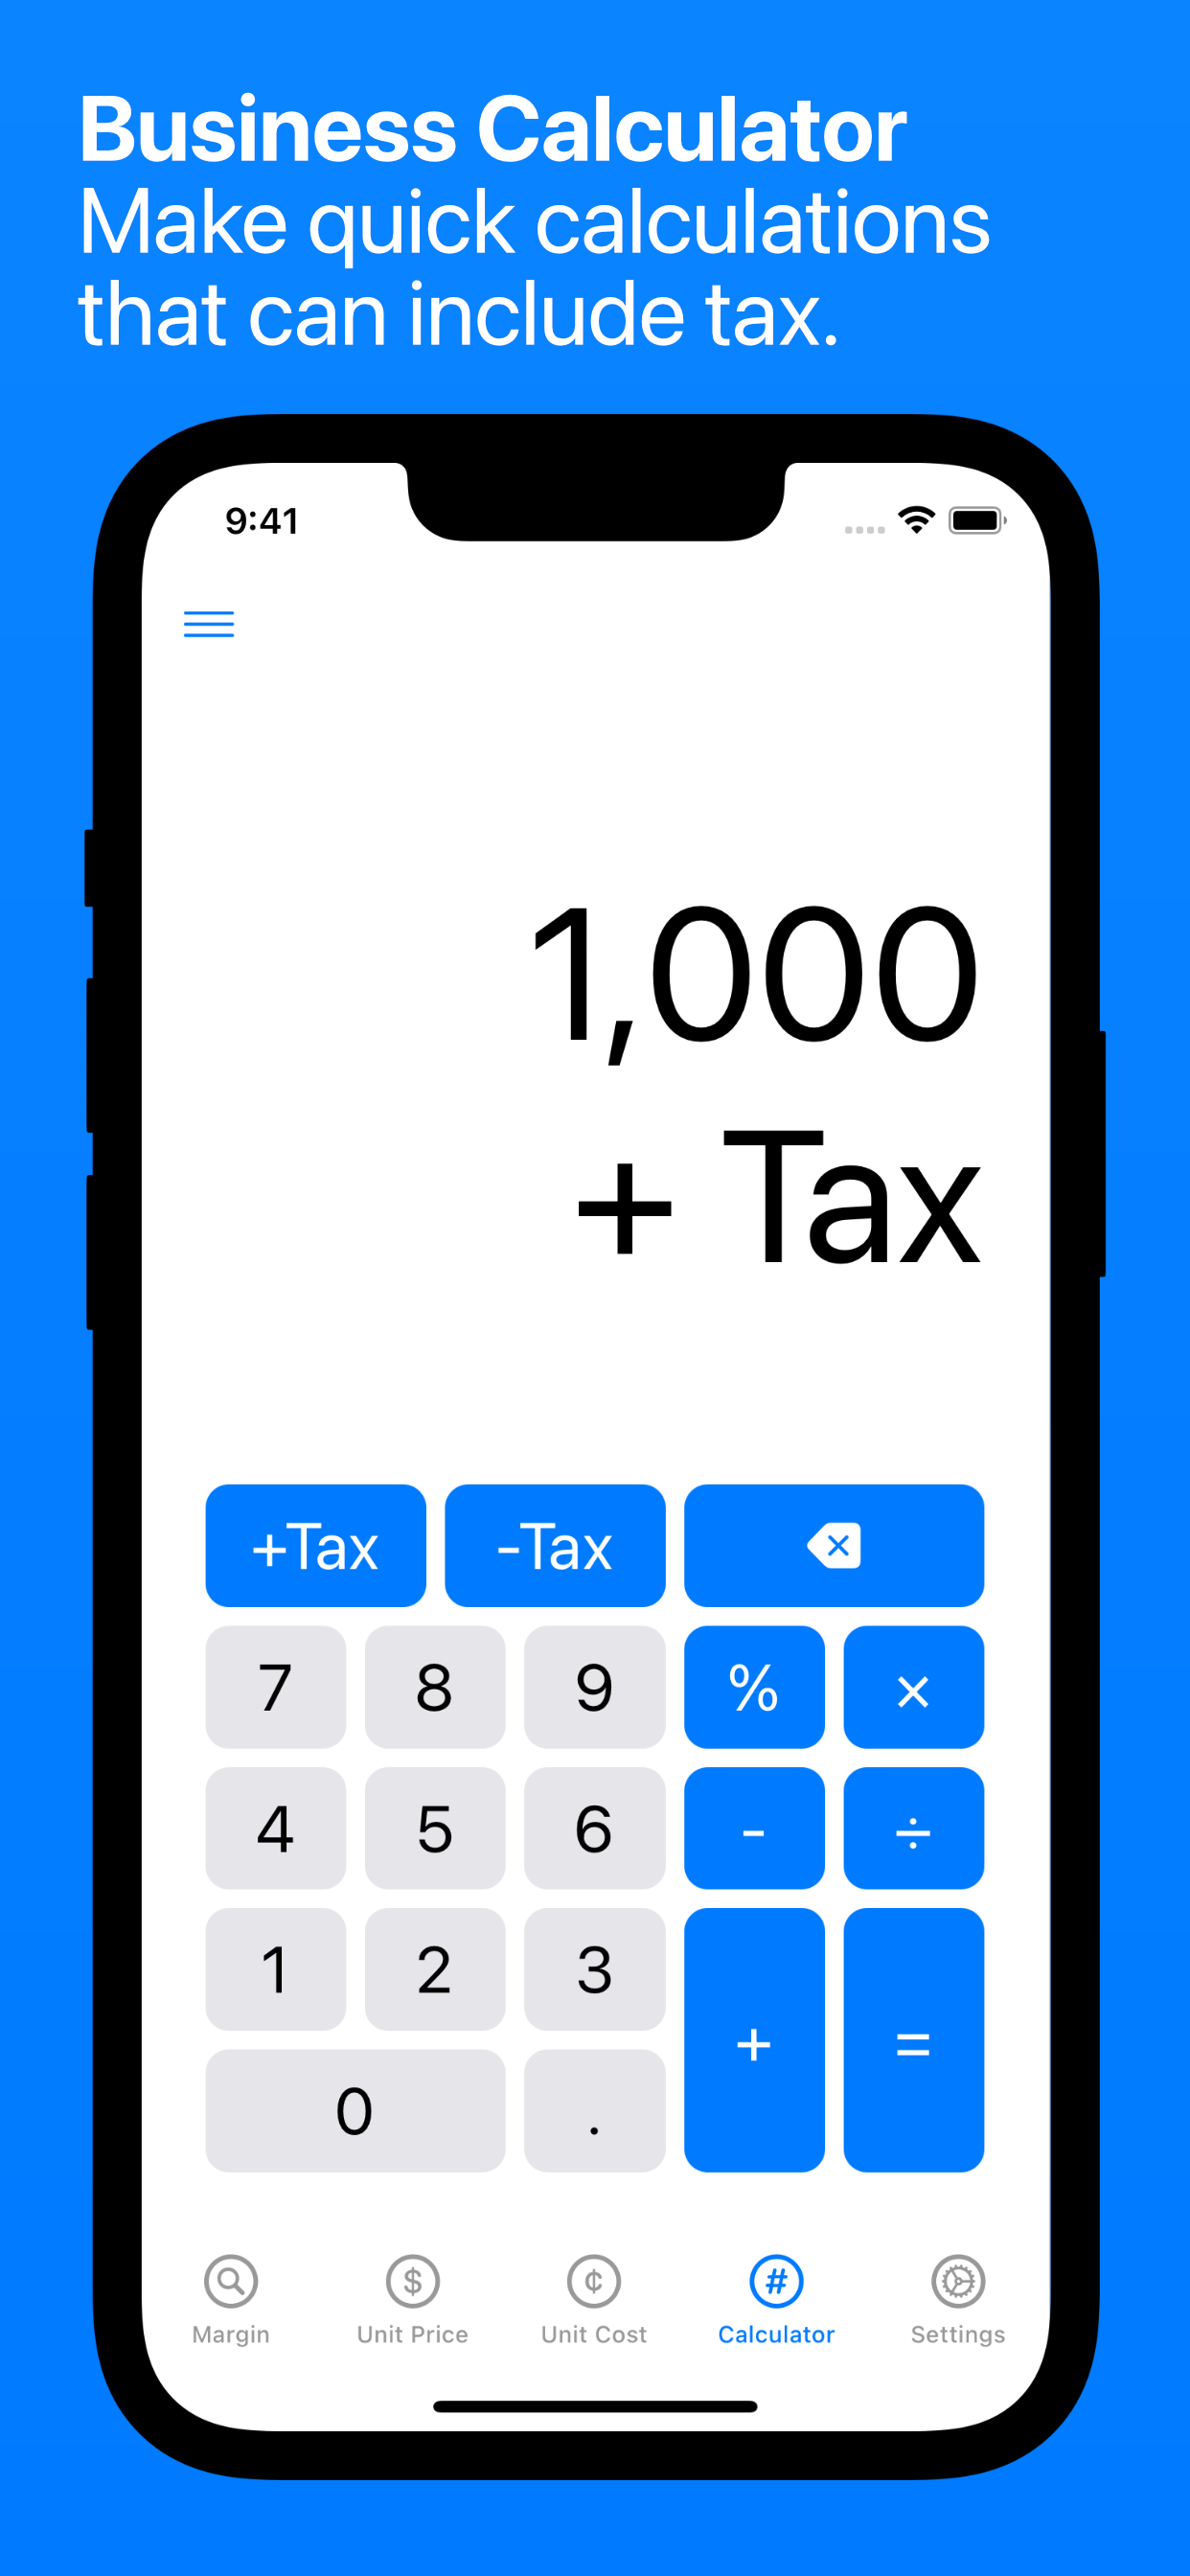 Business Calculator on iPhone